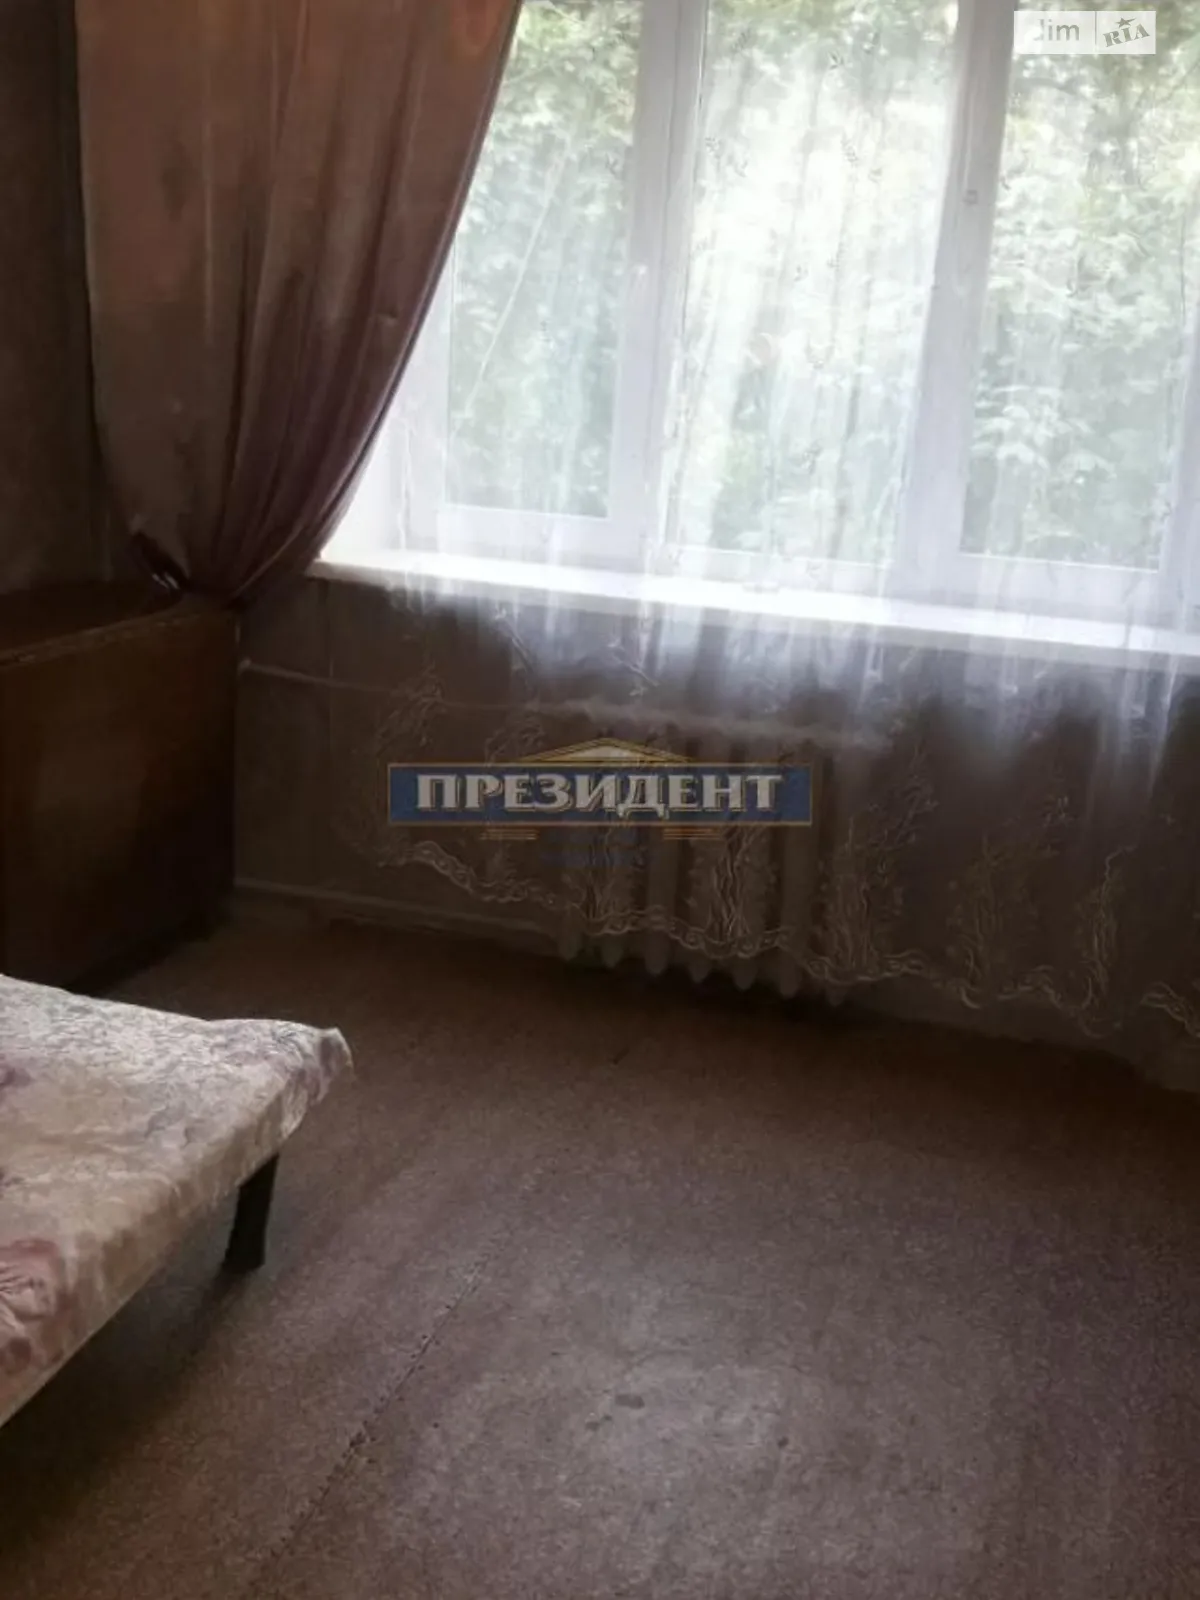 Продается комната 75 кв. м в Одессе, цена: 7800 $ - фото 1